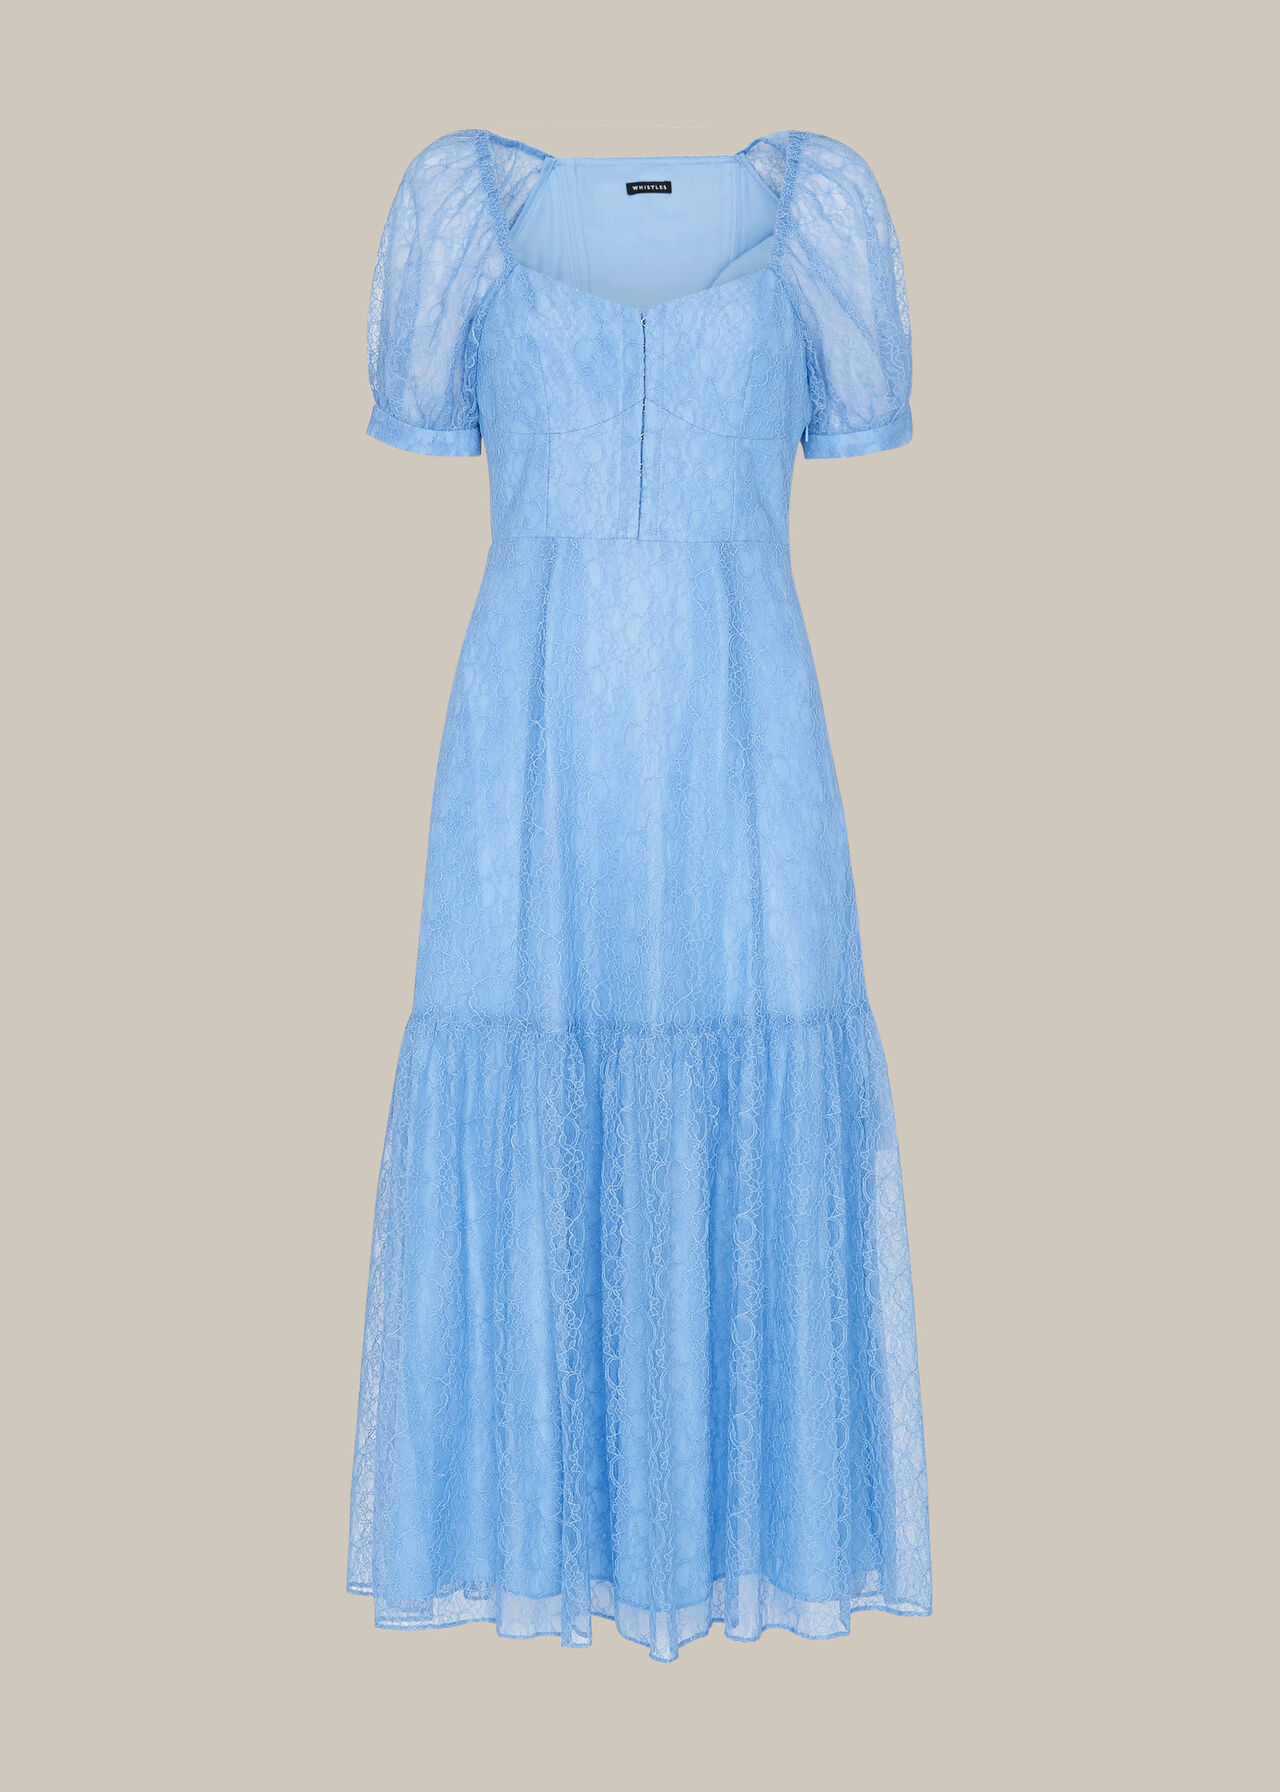 Lace Corset Dress